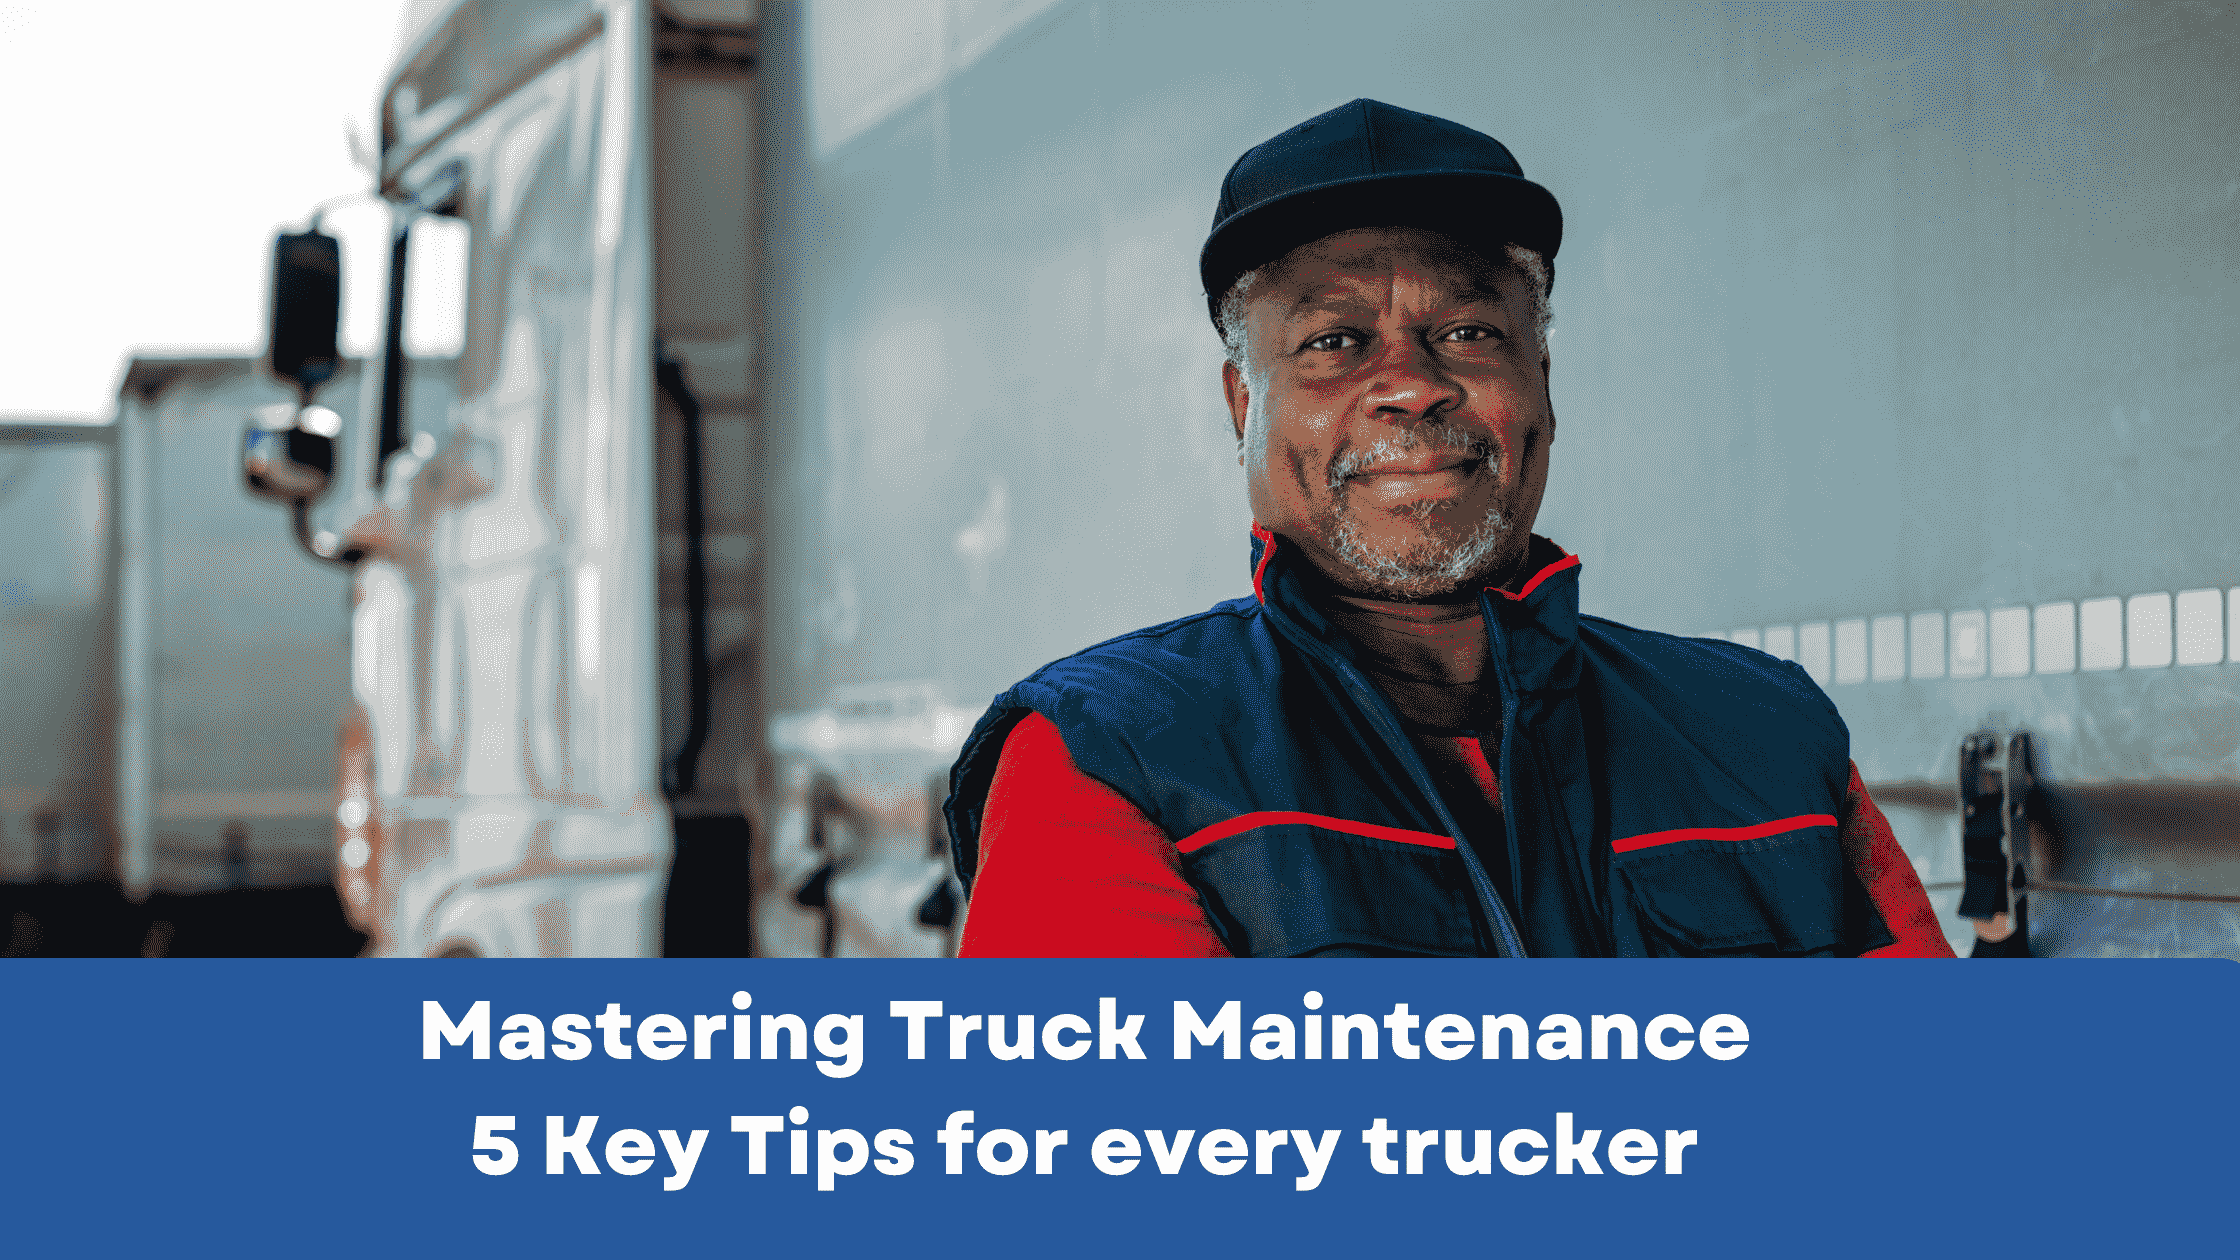 Mastering Truck Maintenance: 5 Key Tips for every trucker